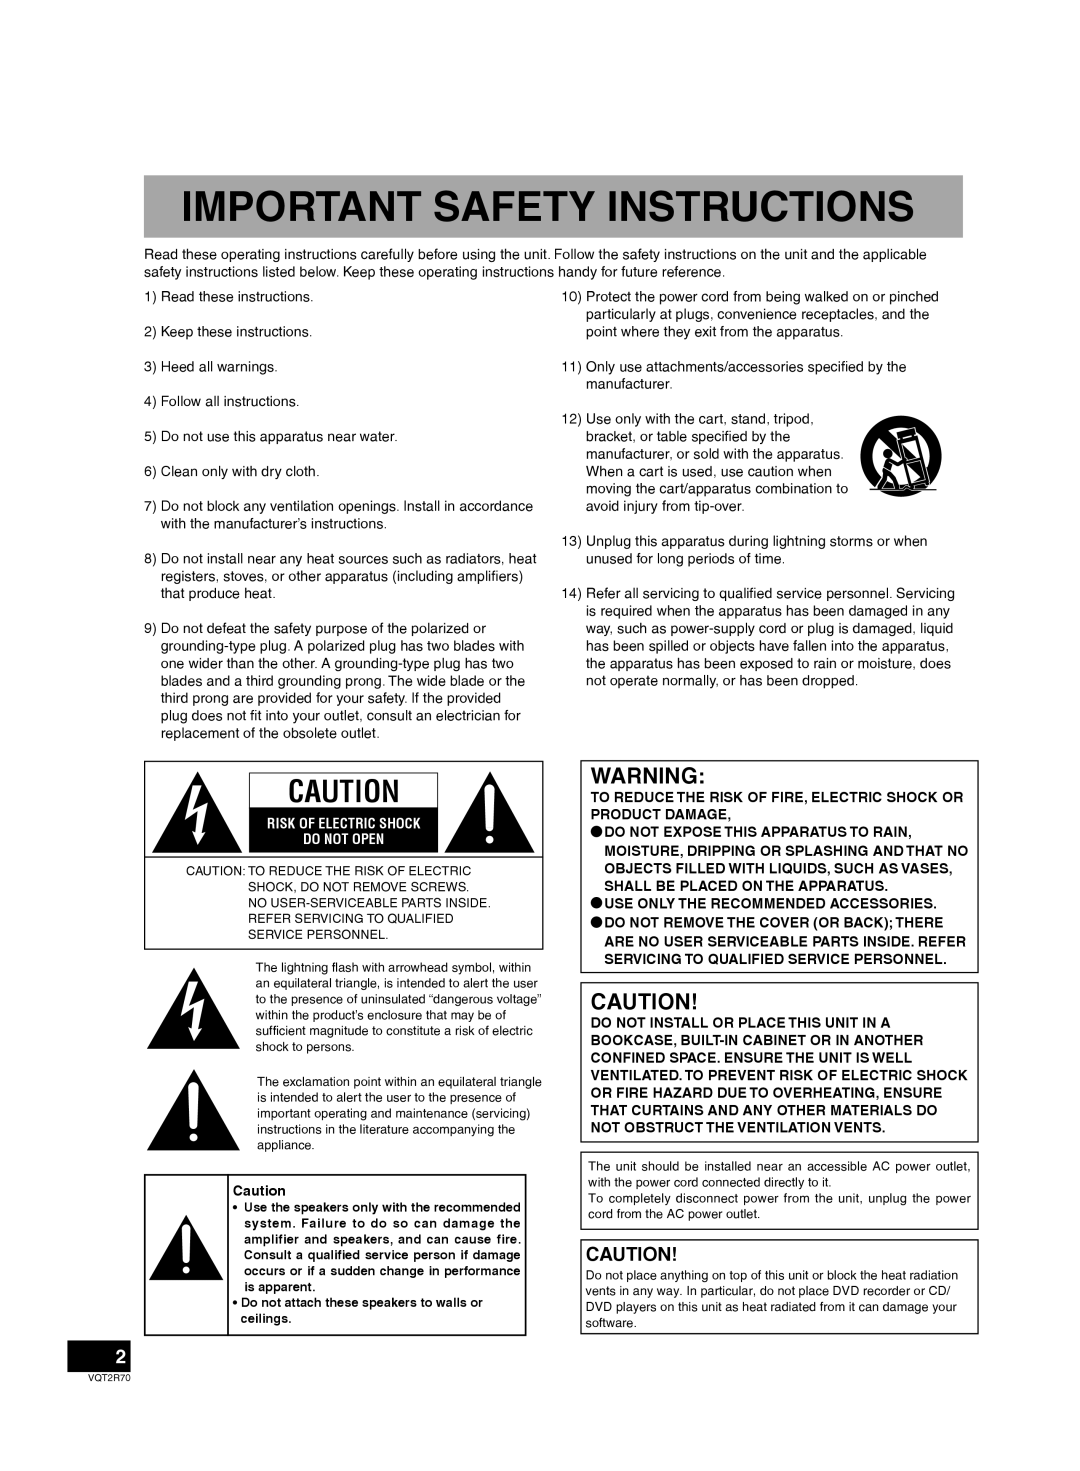 Panasonic SC-ZT2 warranty Important Safety Instructions, Risk Of Electric Shock Do Not Open 